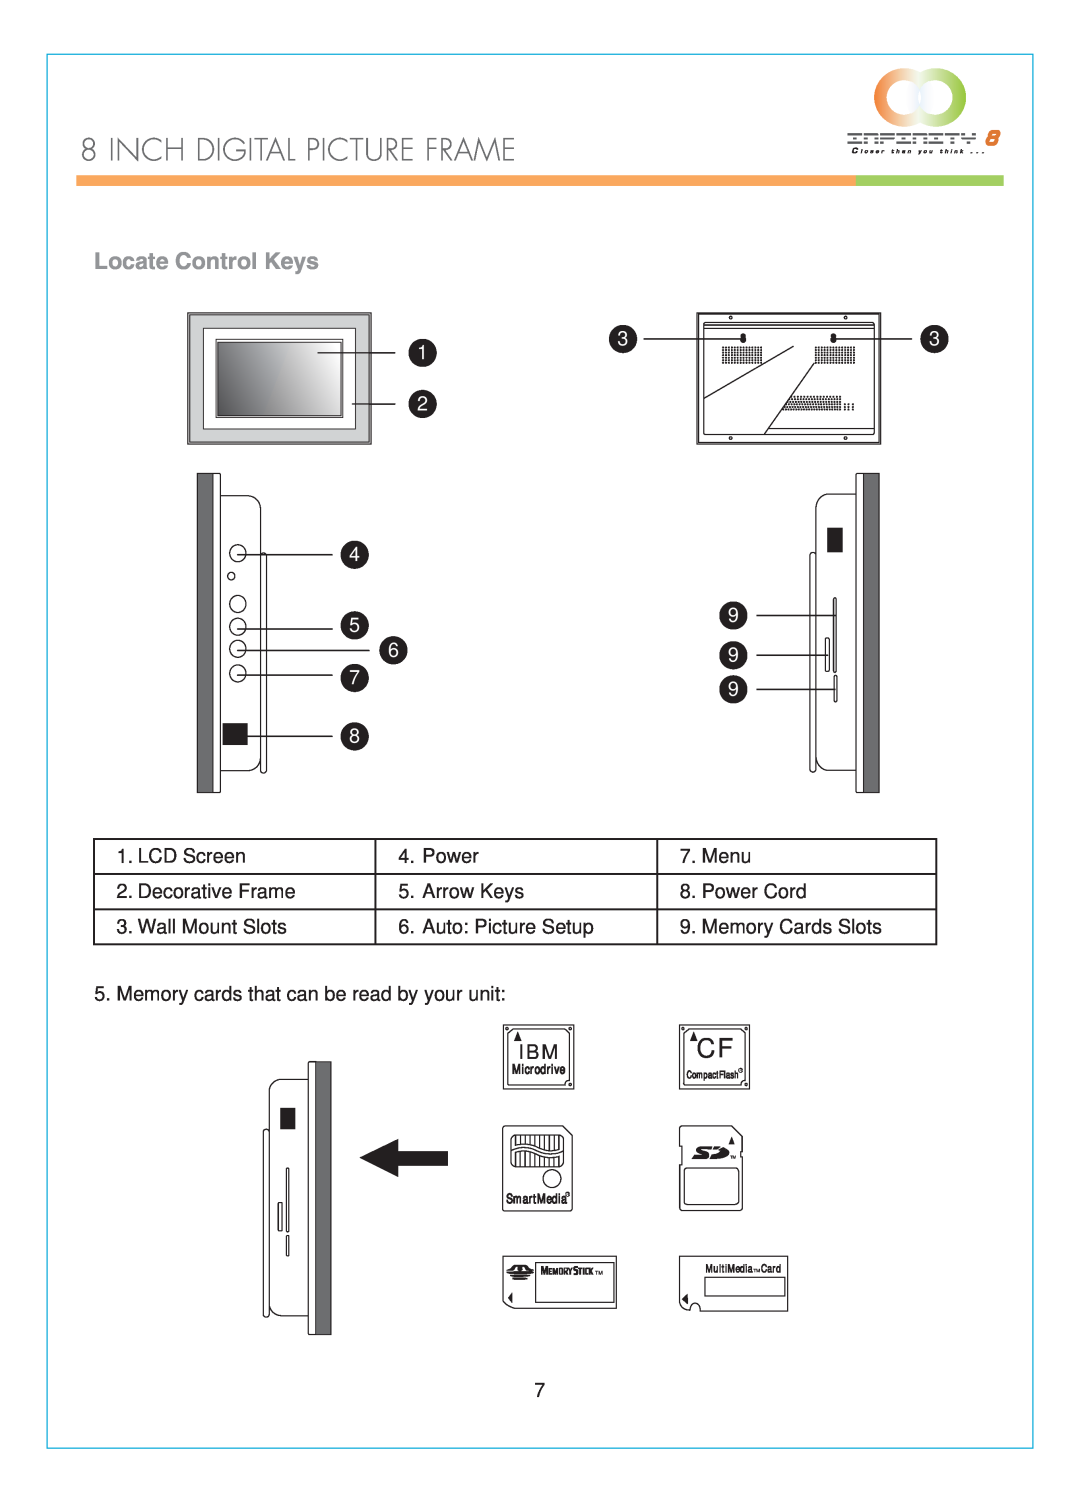 Infinity DPF-8000 user manual Locate Control Keys, Ibm Cf, Inch Digital Picture Frame 